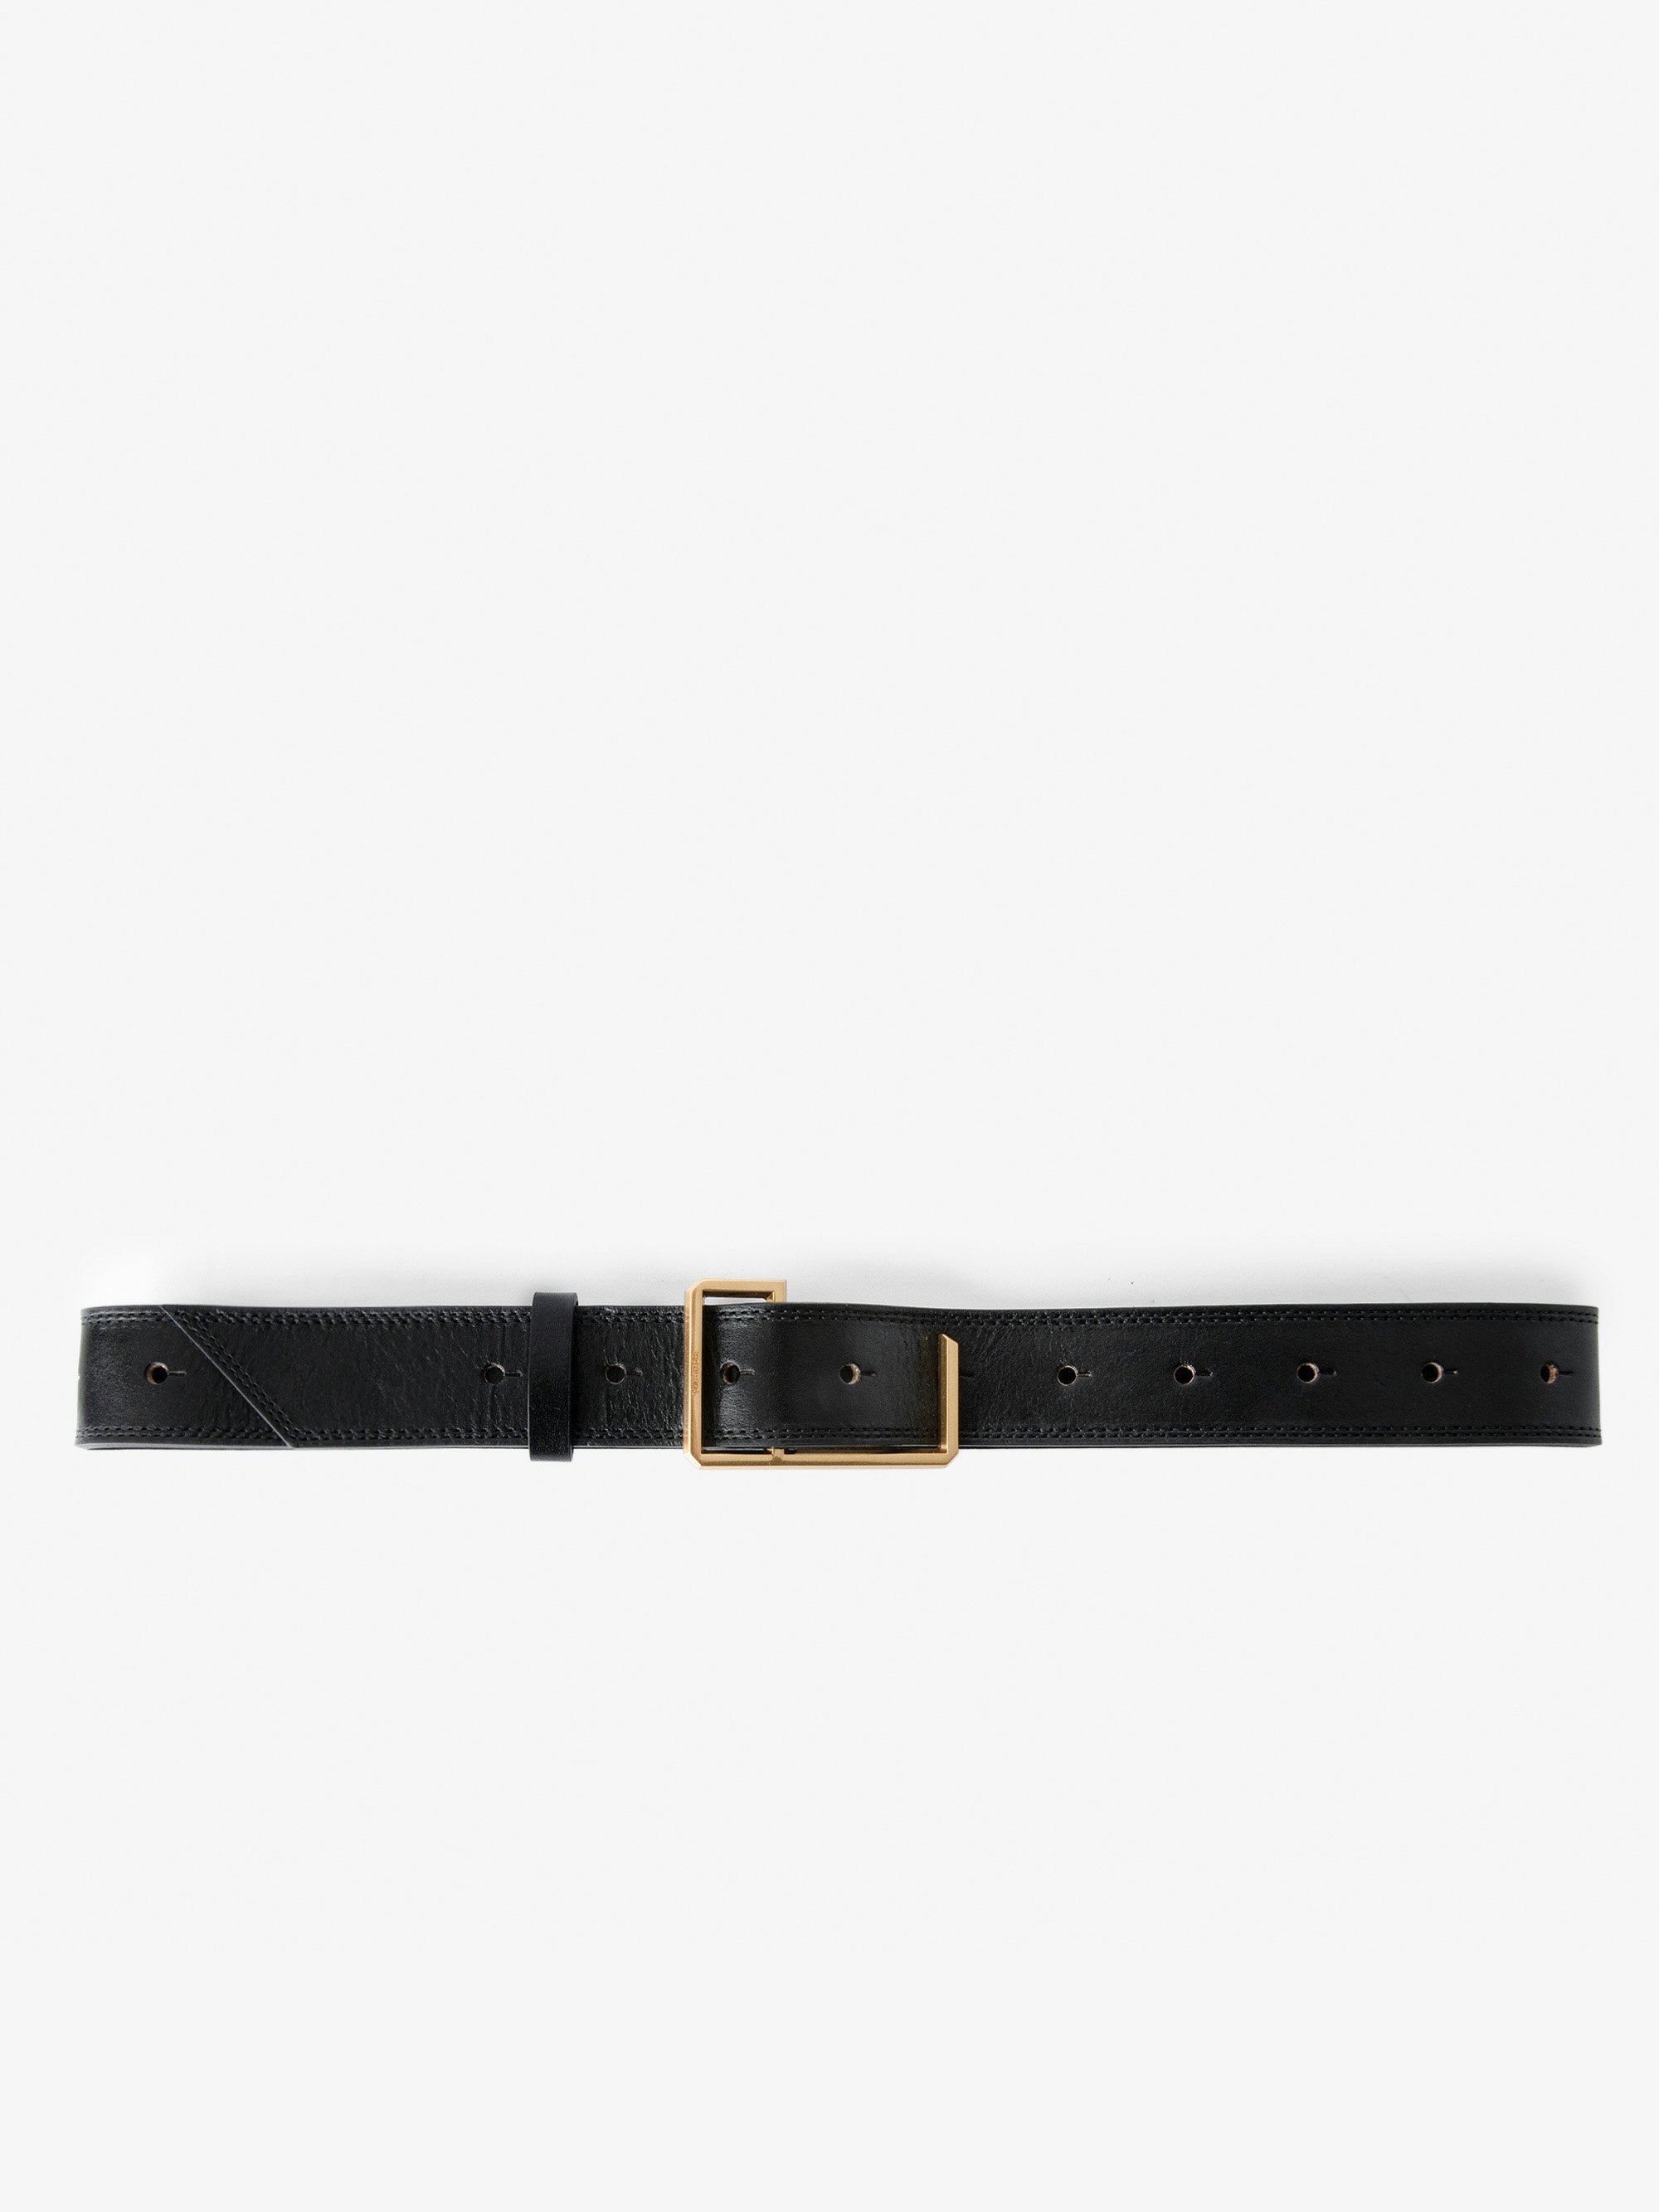 La Cecilia Obsession Belt - Women's black leather belt with gold-tone C buckle.